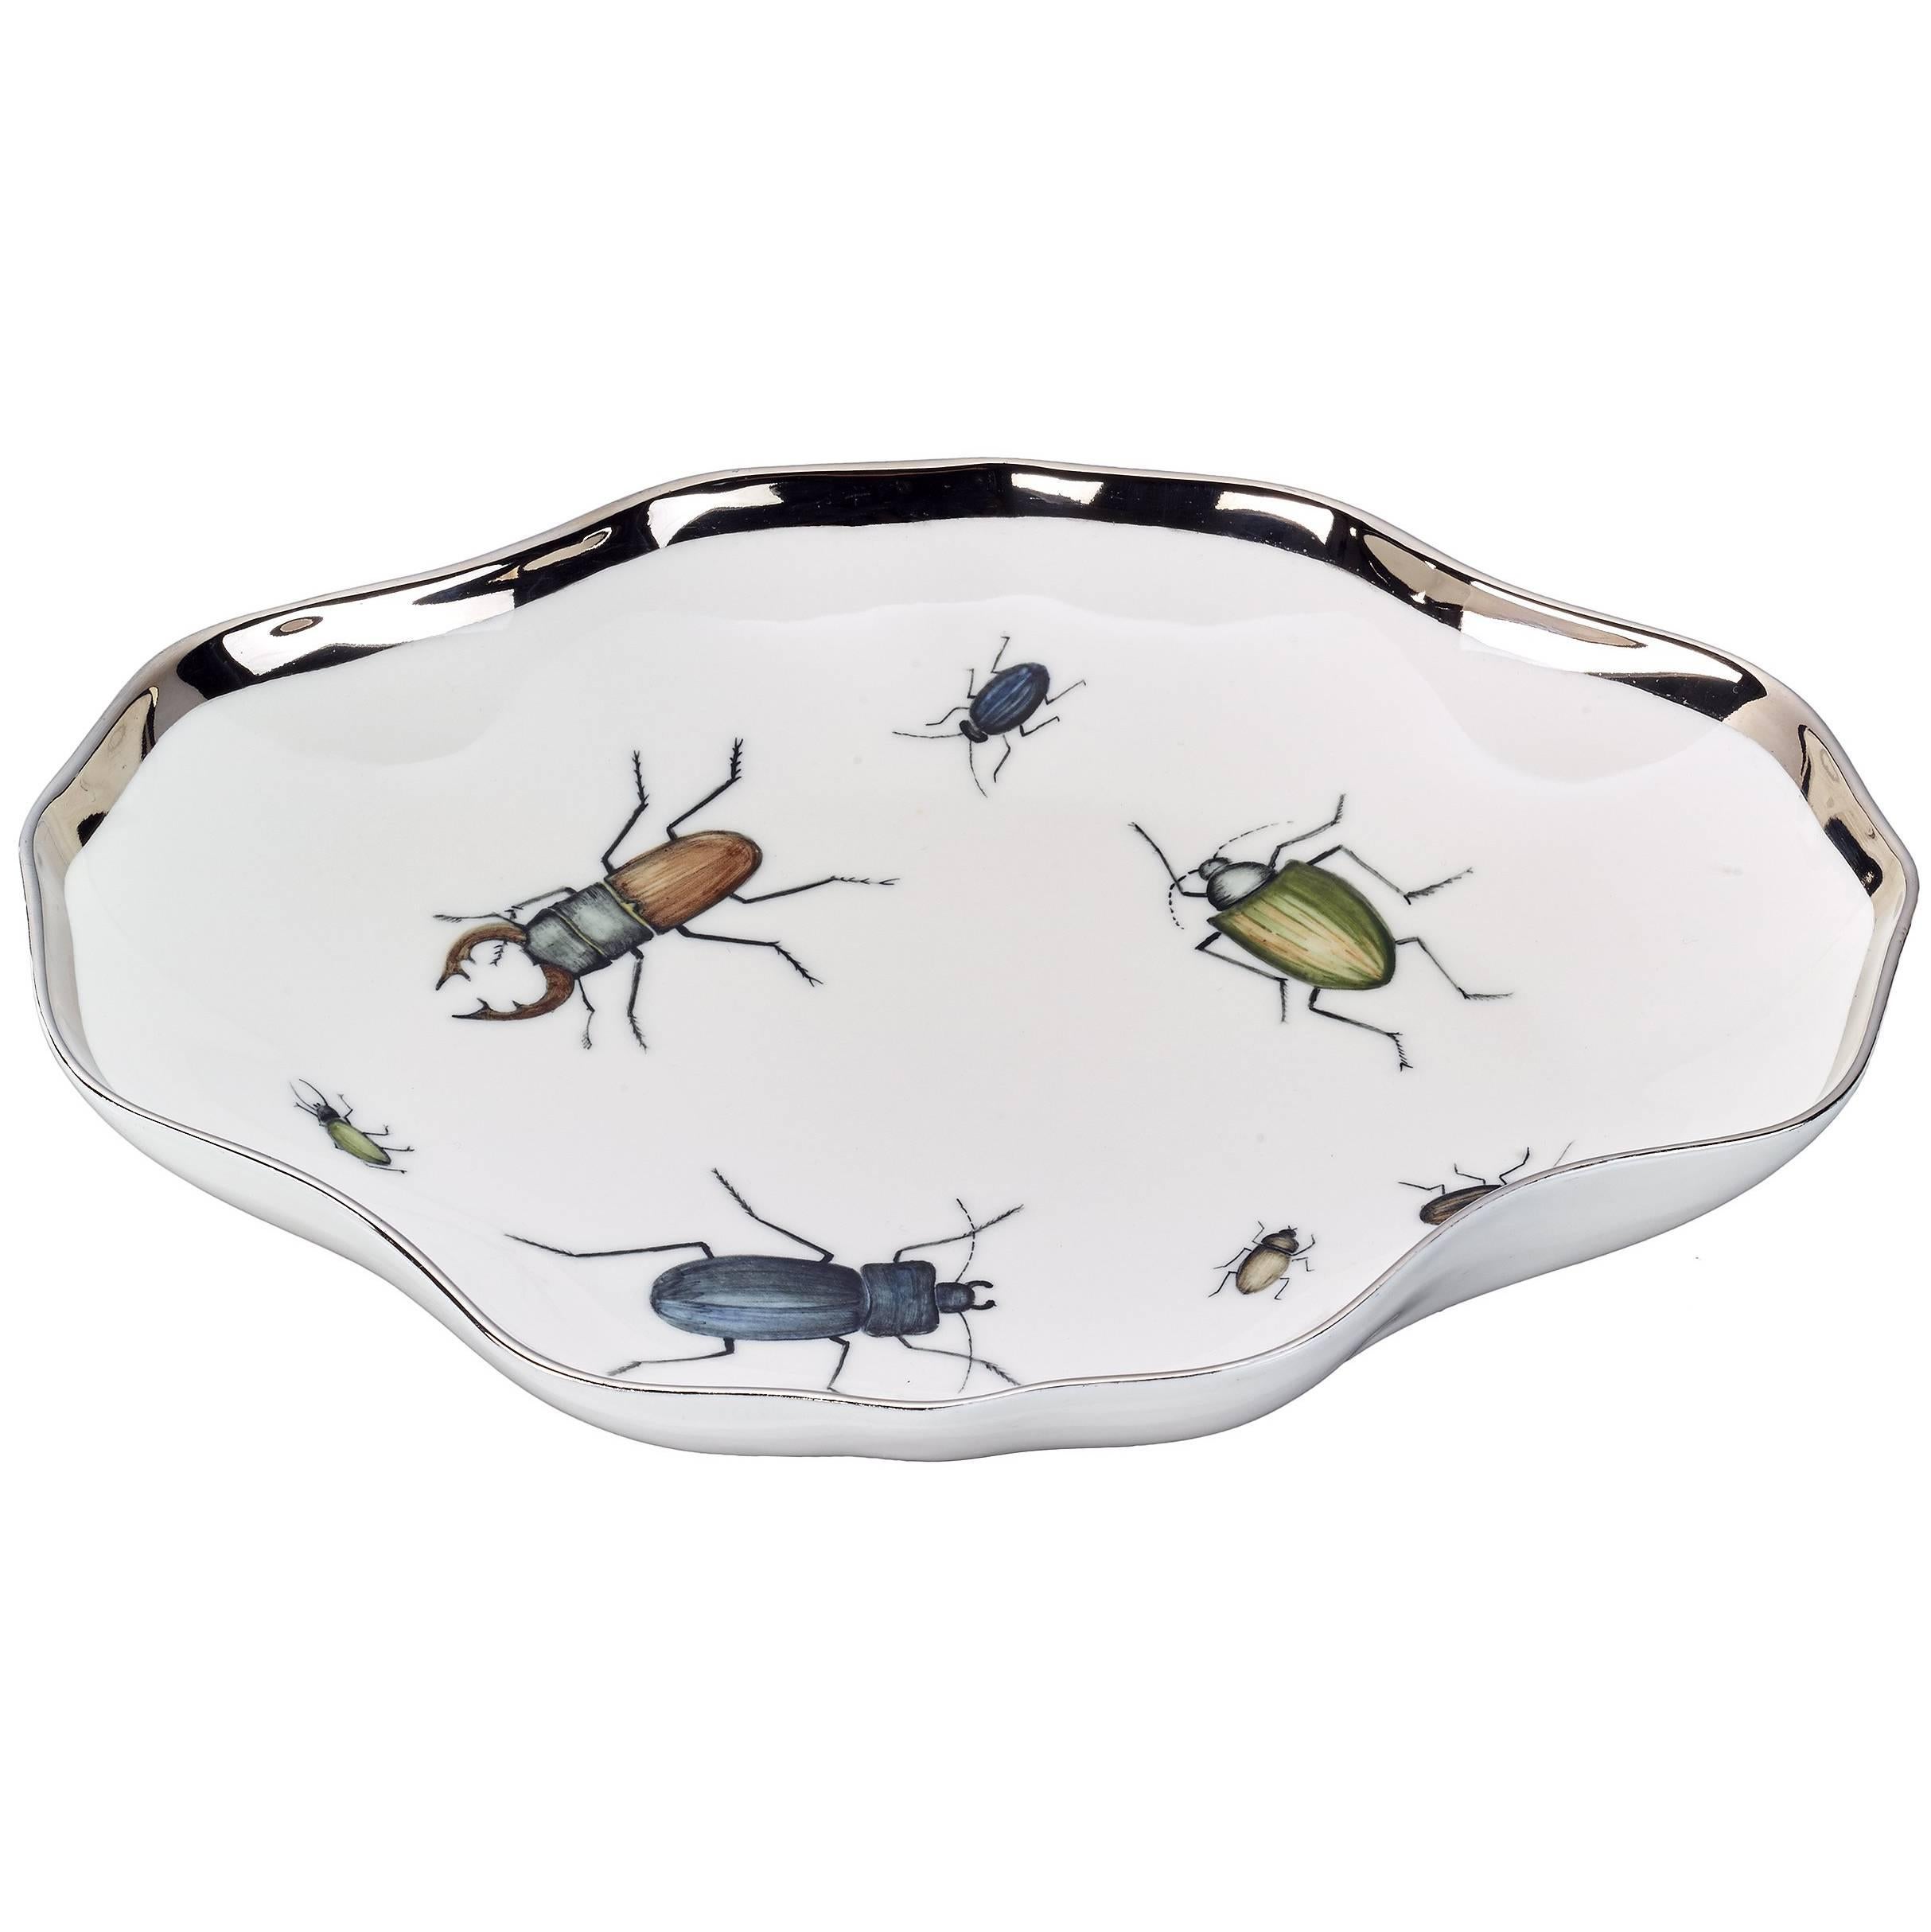 Modern Porcelain Dish with Beetles Sofina Boutique Kitzbuehel For Sale